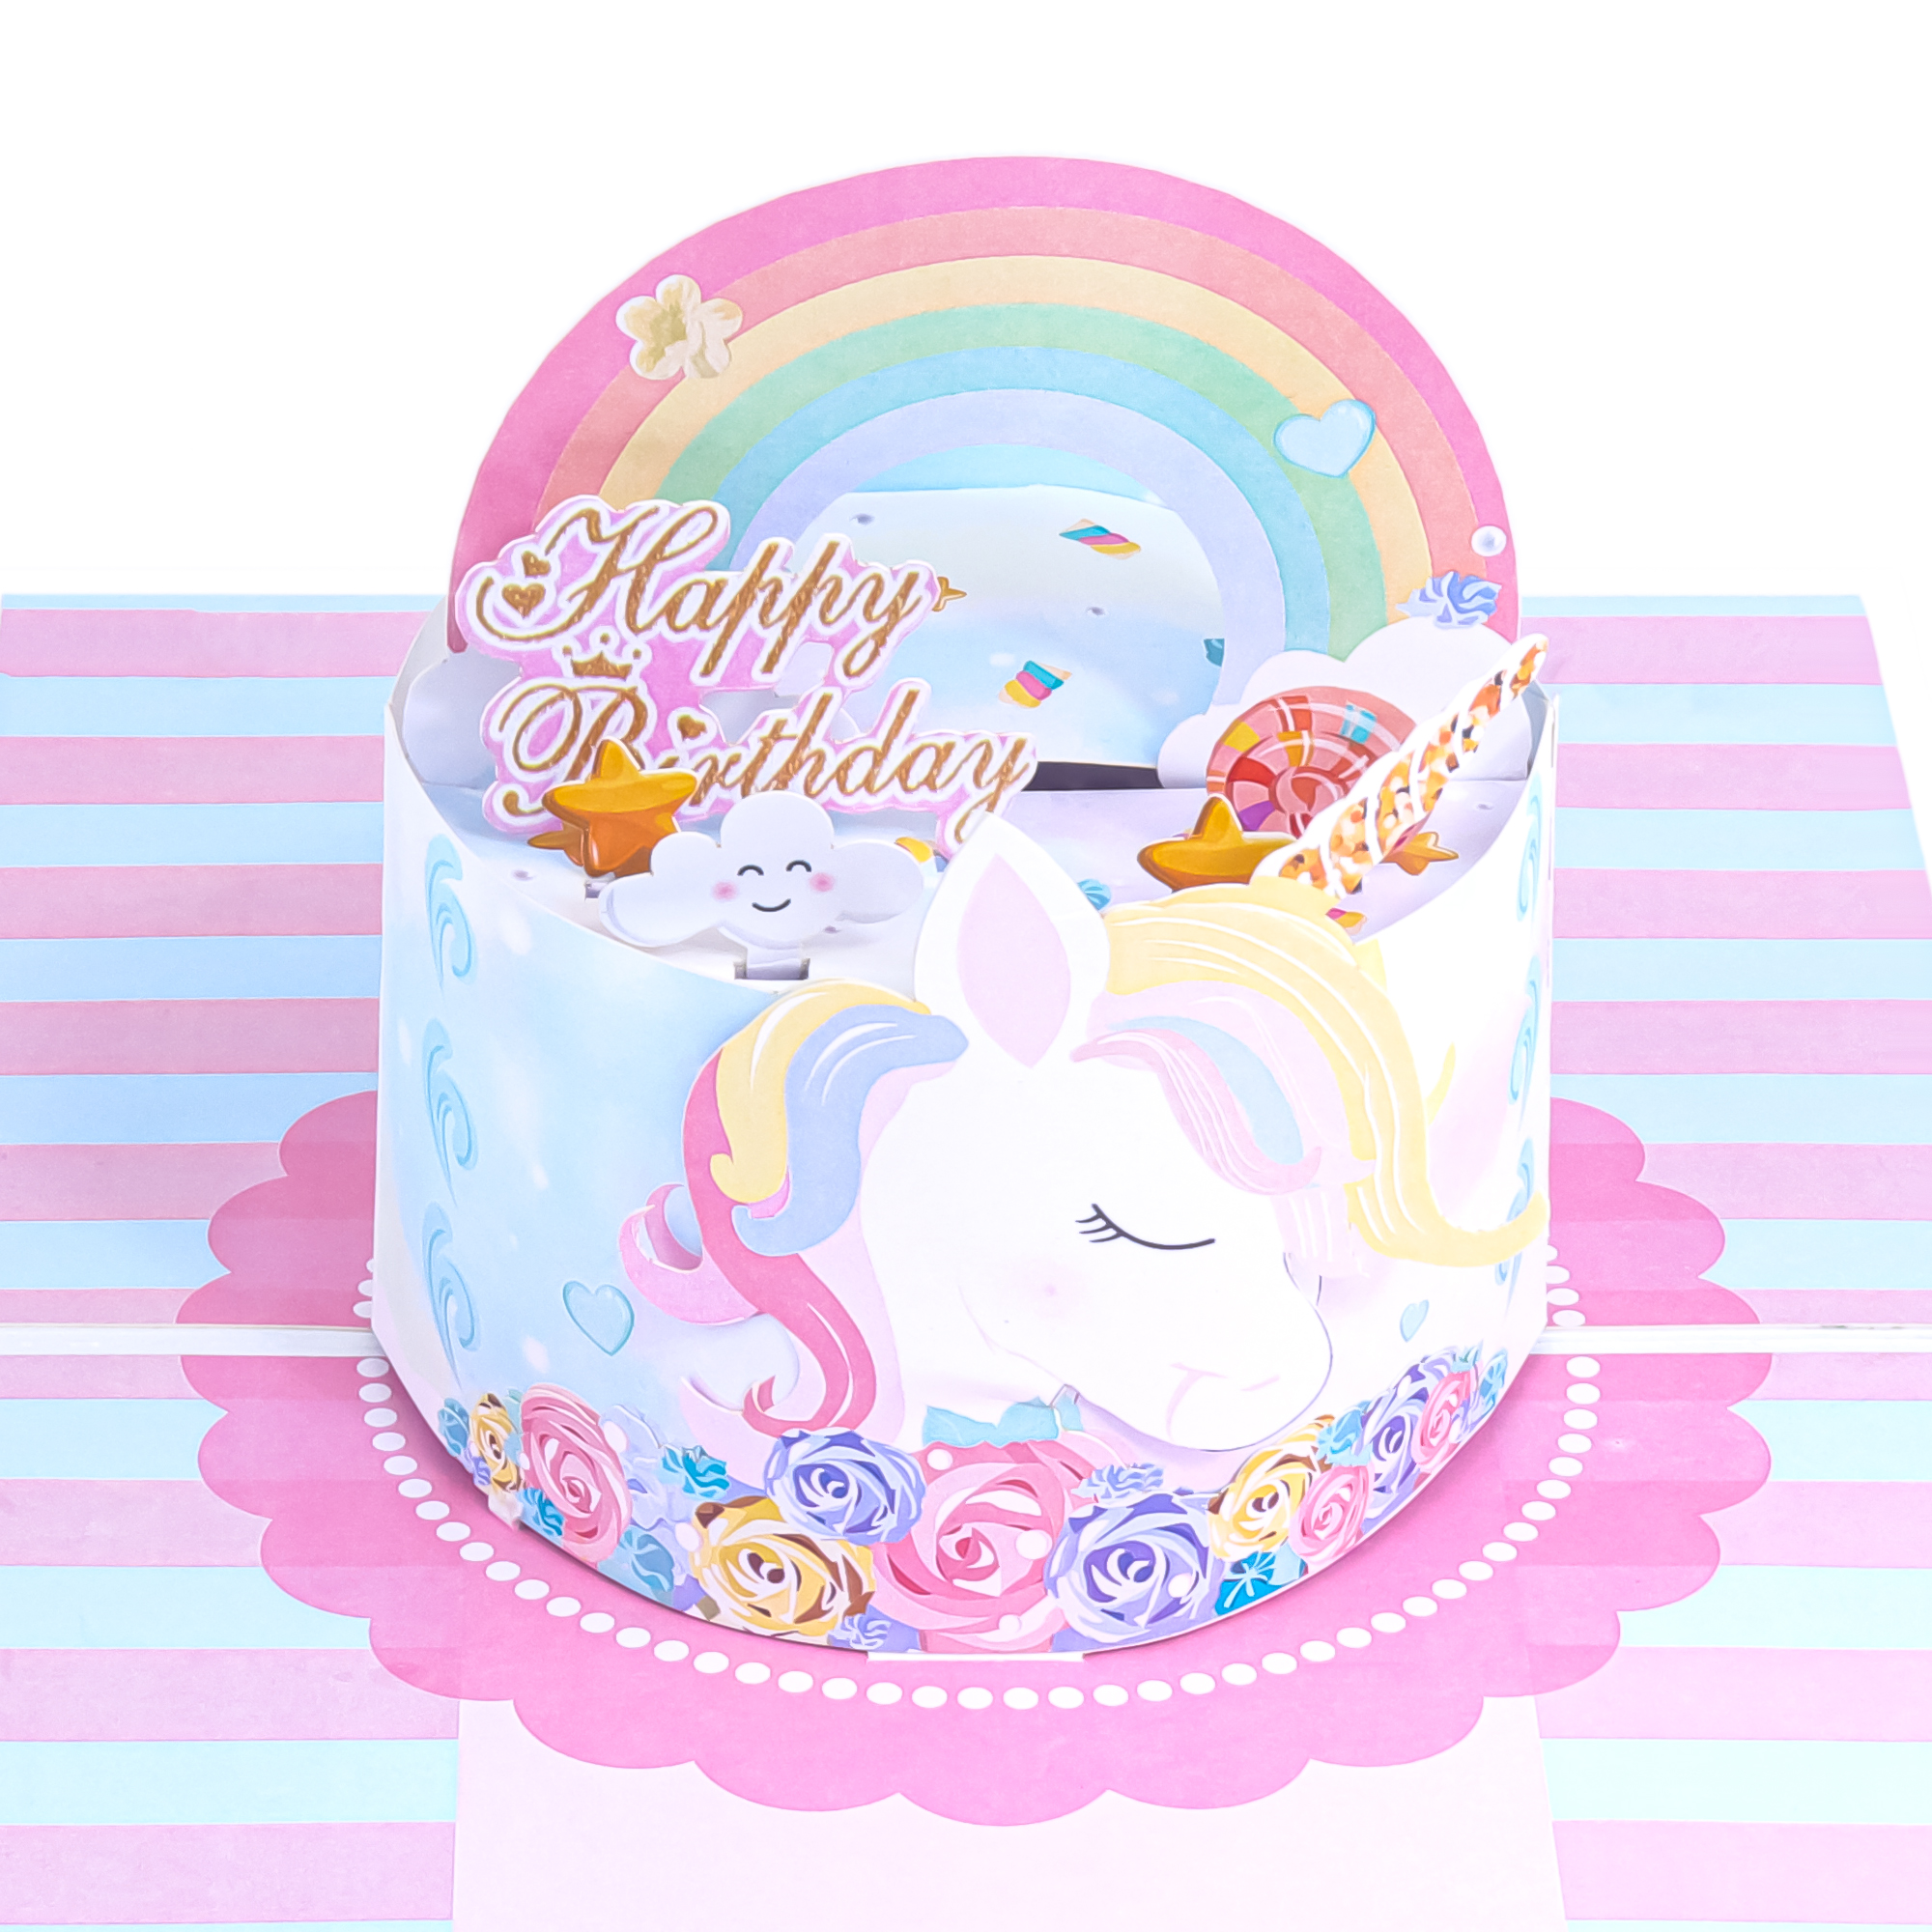 The Unicorn Cake - Original